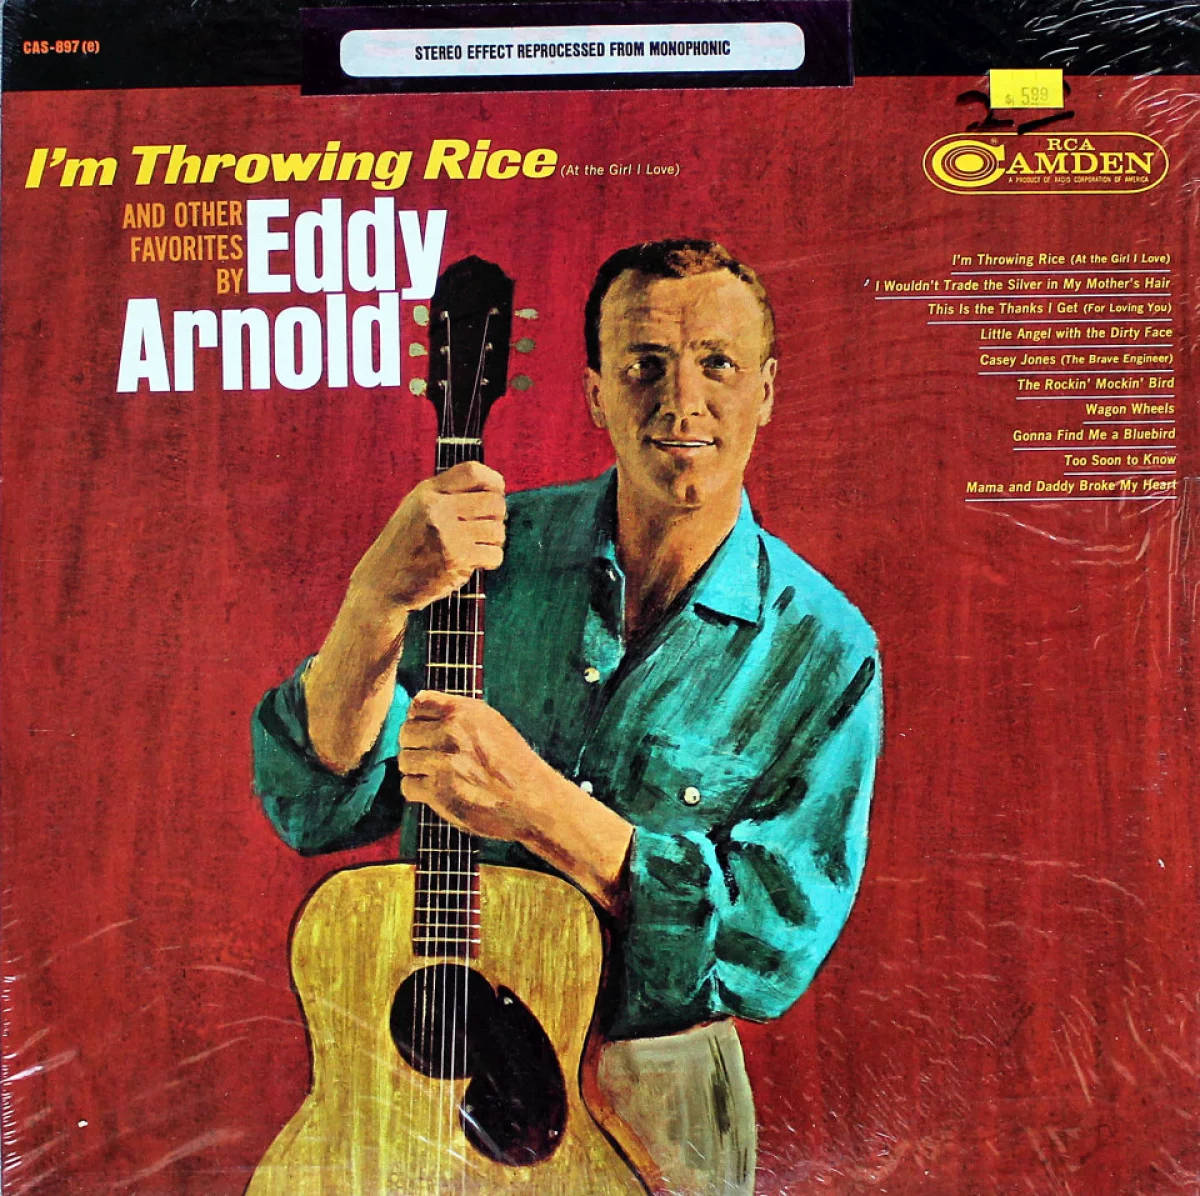 Eddy Arnold - "I'm Throwing Rice" Vinyl Album Cover Wallpaper